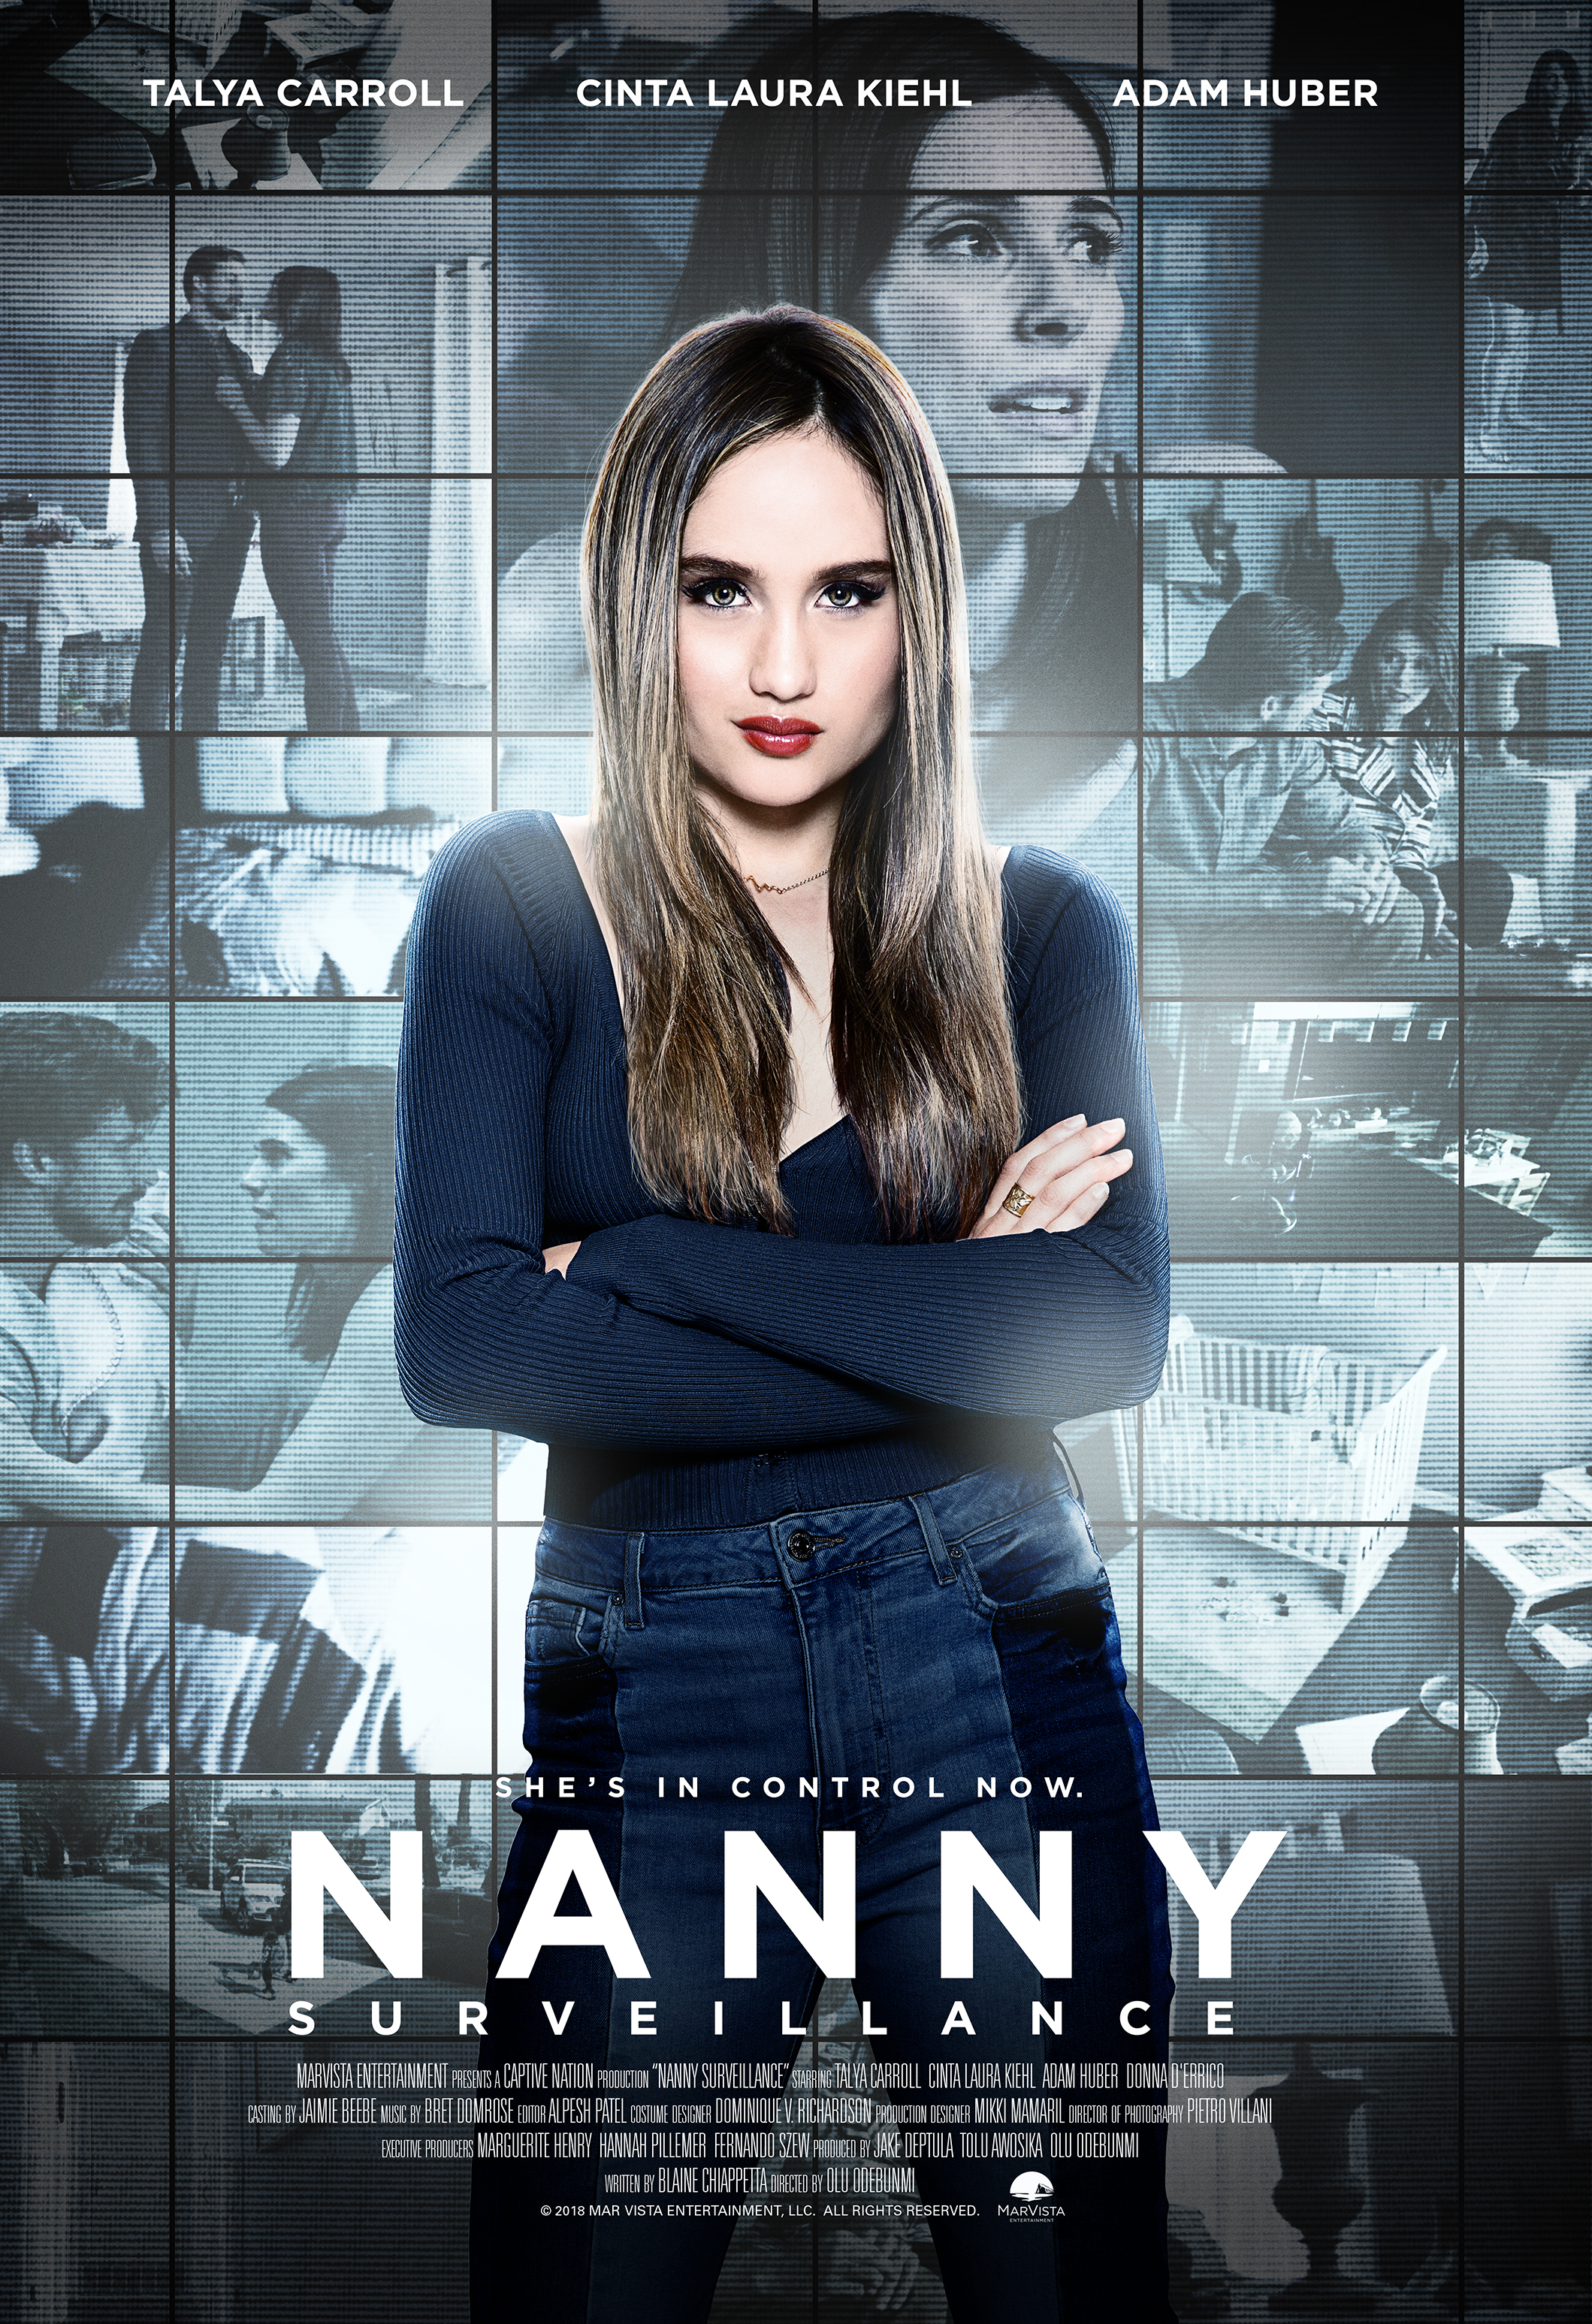 Nanny Surveillance (2018) starring Talya Carroll on DVD on DVD